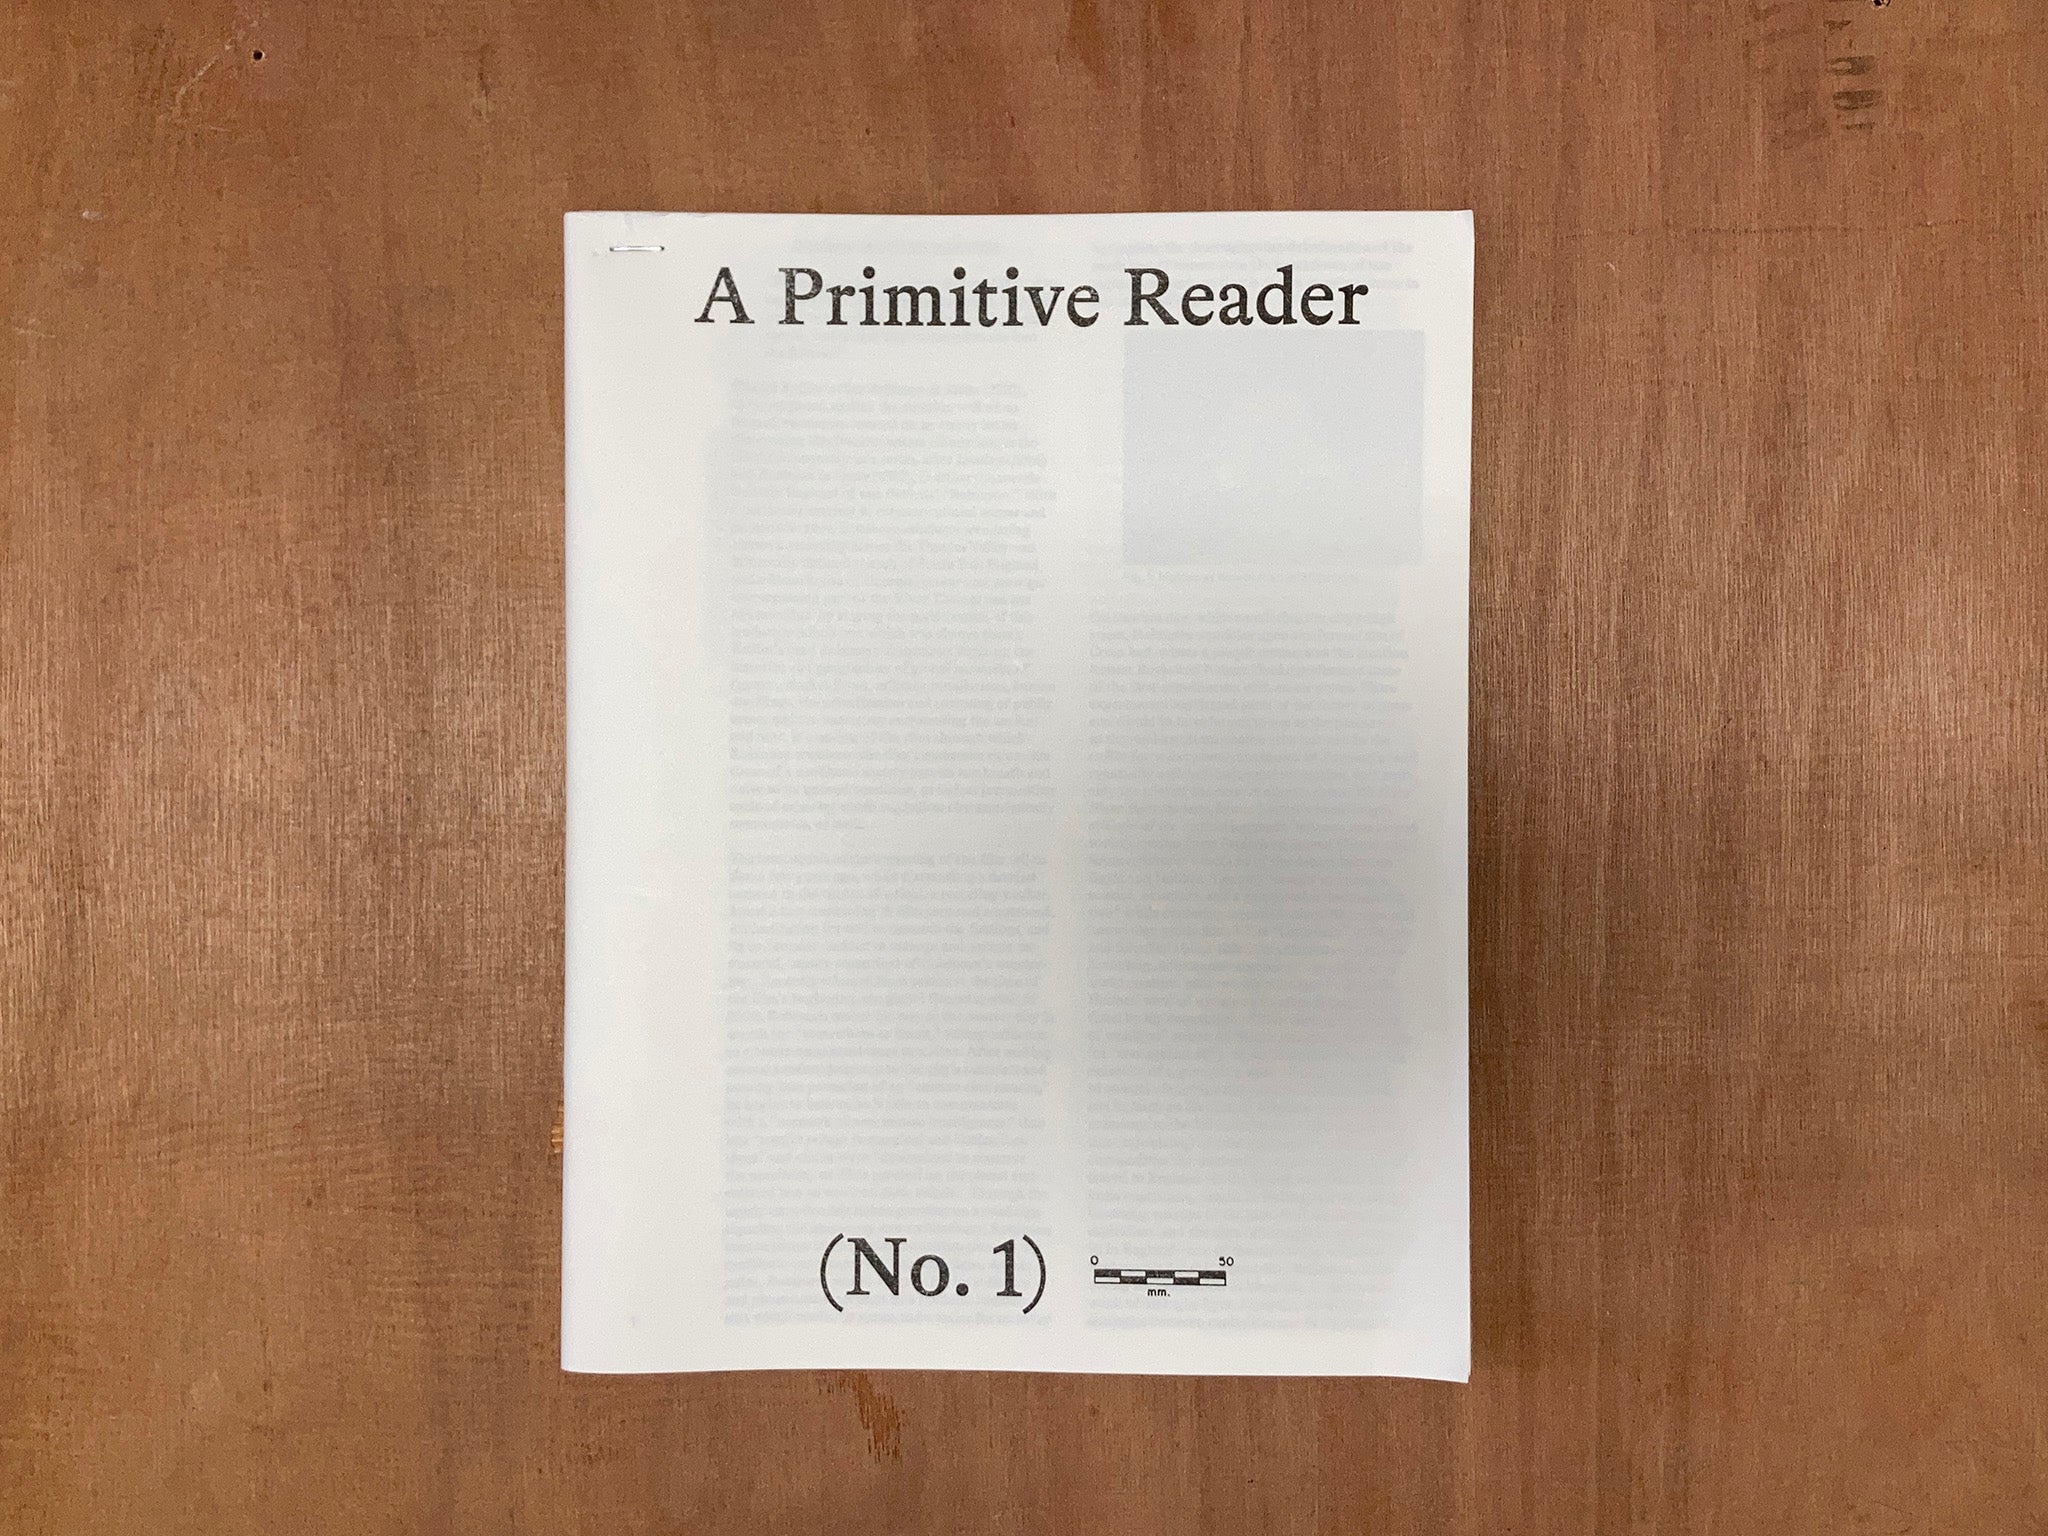 A PRIMITIVE READER (NO. 1) by Jacob Lindgren